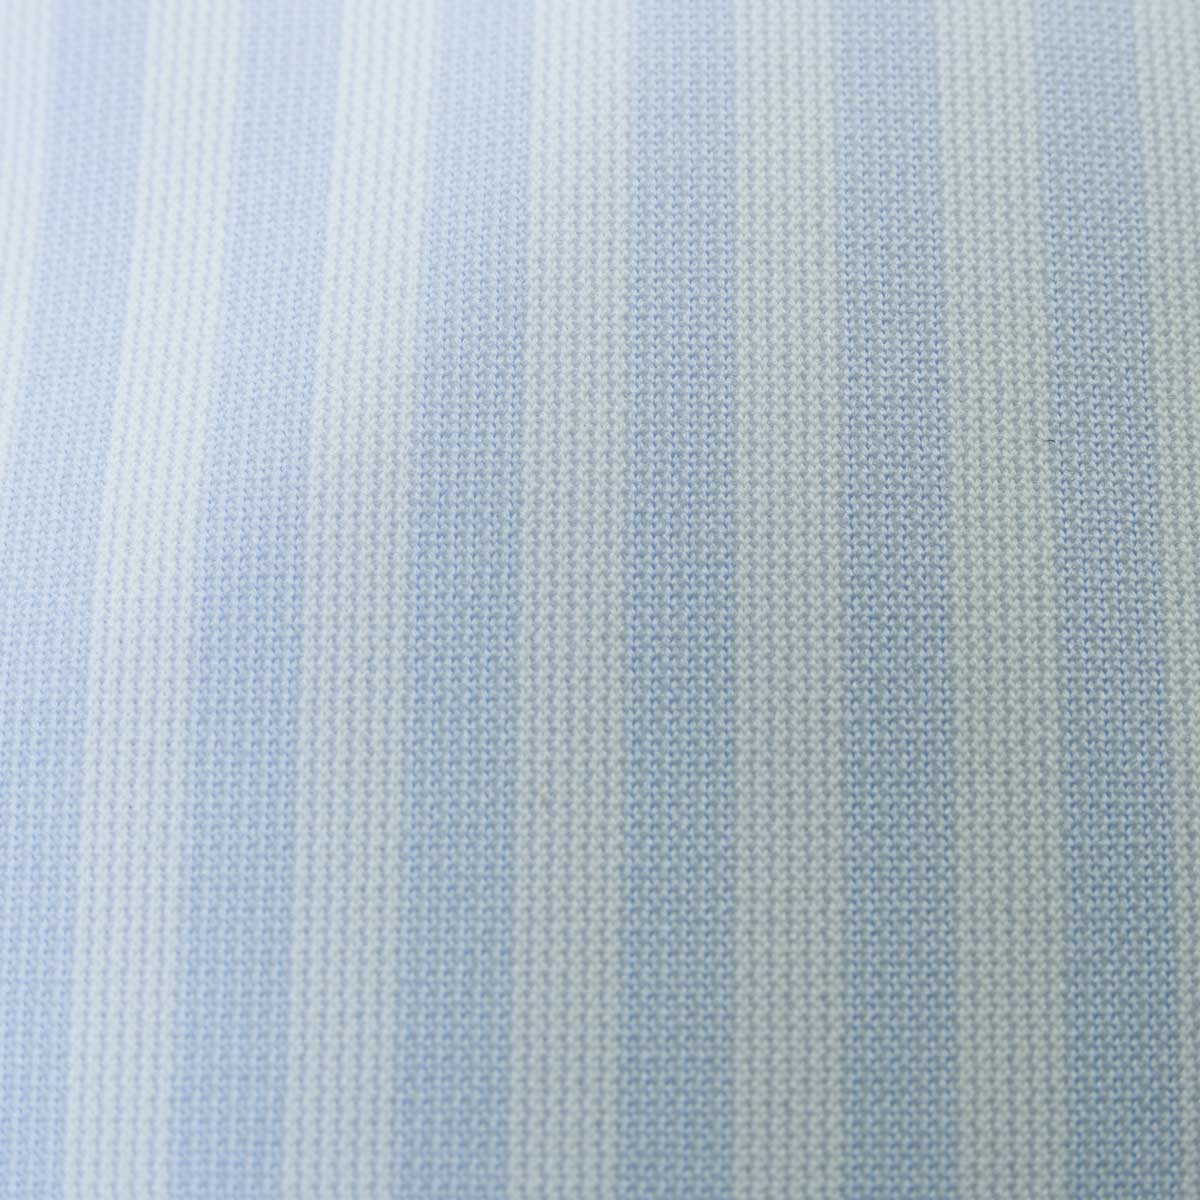 SHIRT HOUSE・ブルーレーベル 半袖スリムフィット ニットシャツ(裄詰不可)ボタンダウン ブルー ワイシャツ